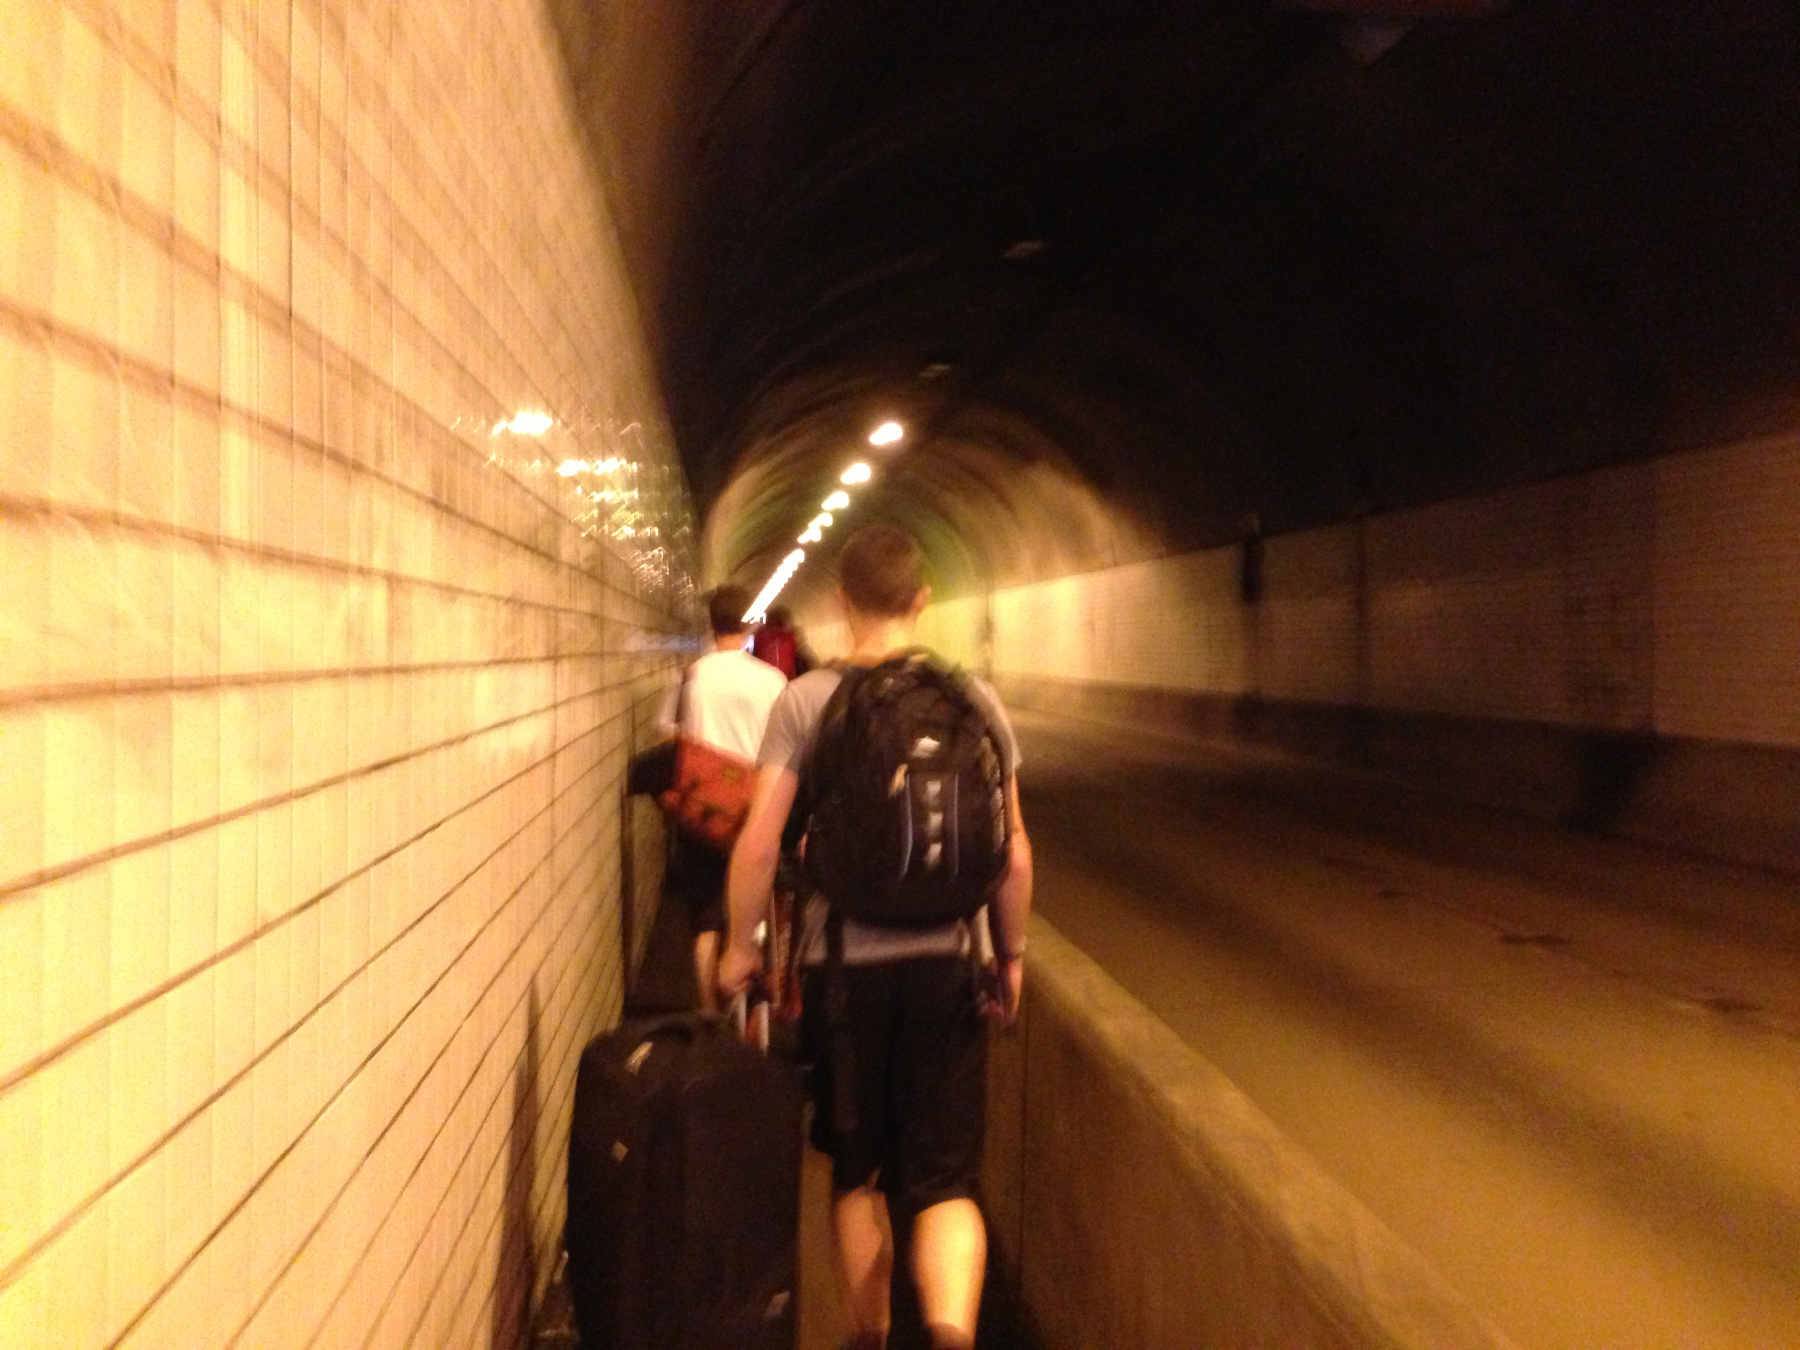 Heading through the tunnel